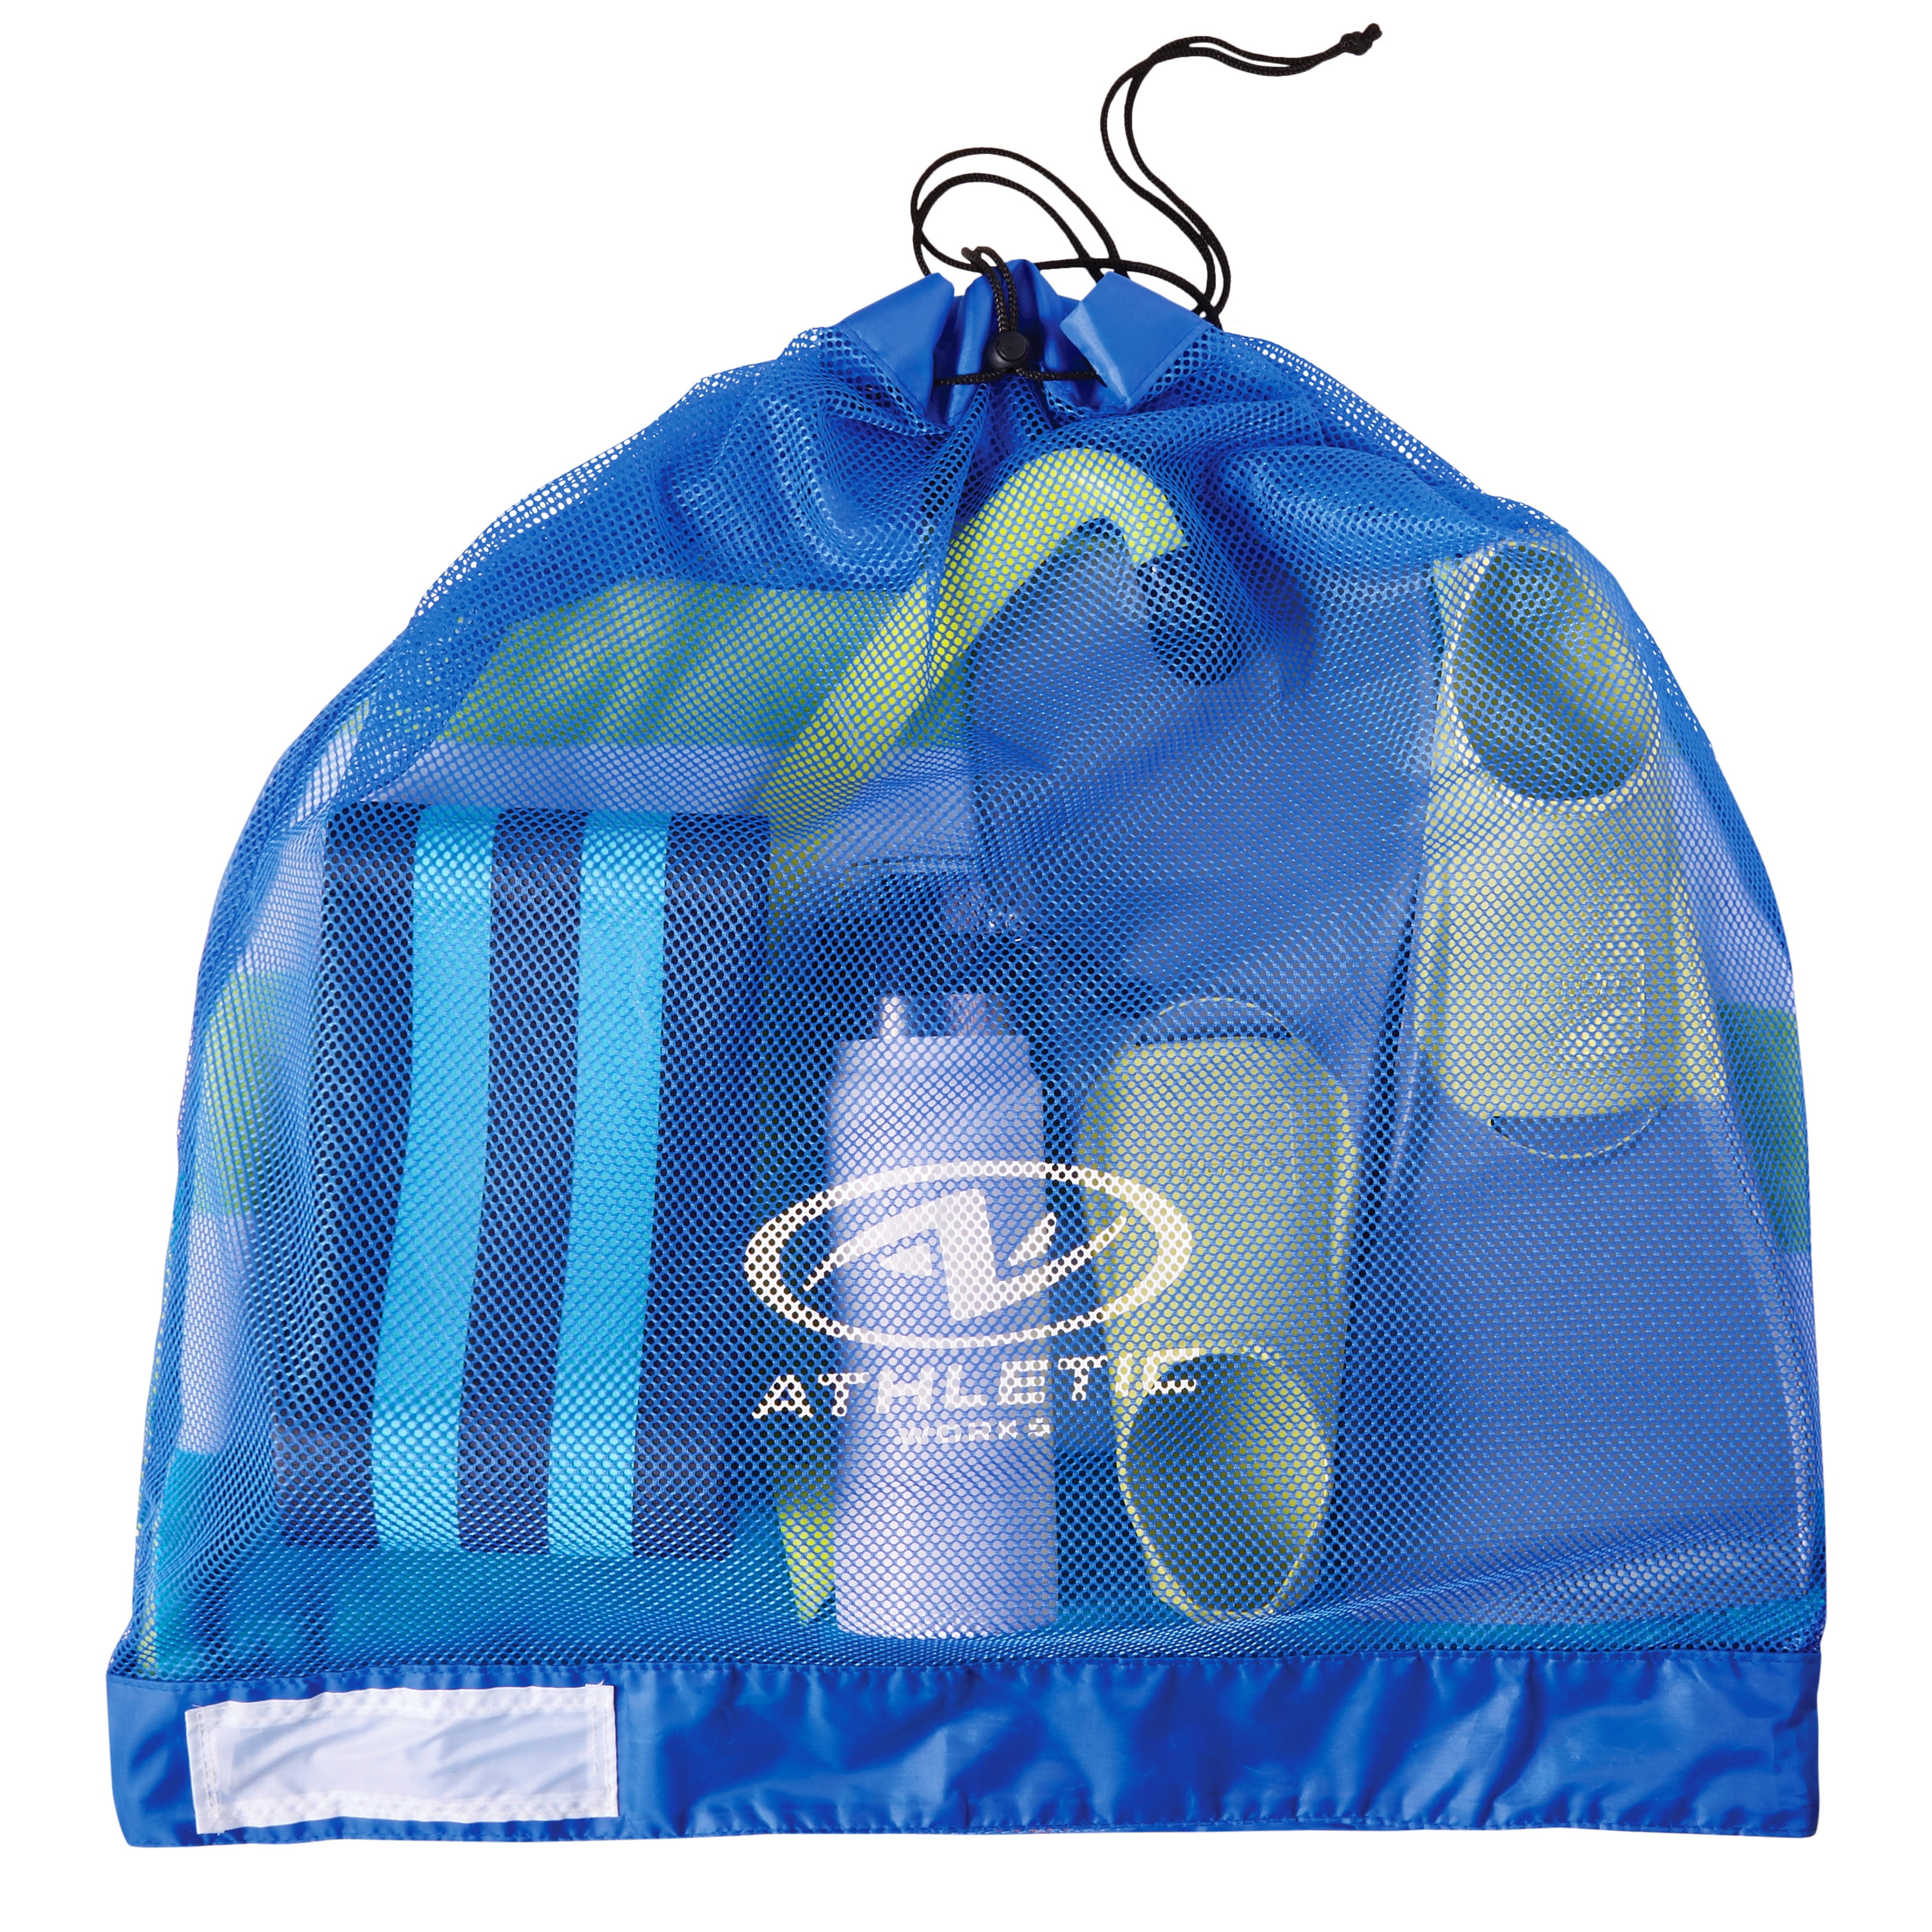 Swimwear & gym bags School sports Drawstring Bags T print Blue colour 